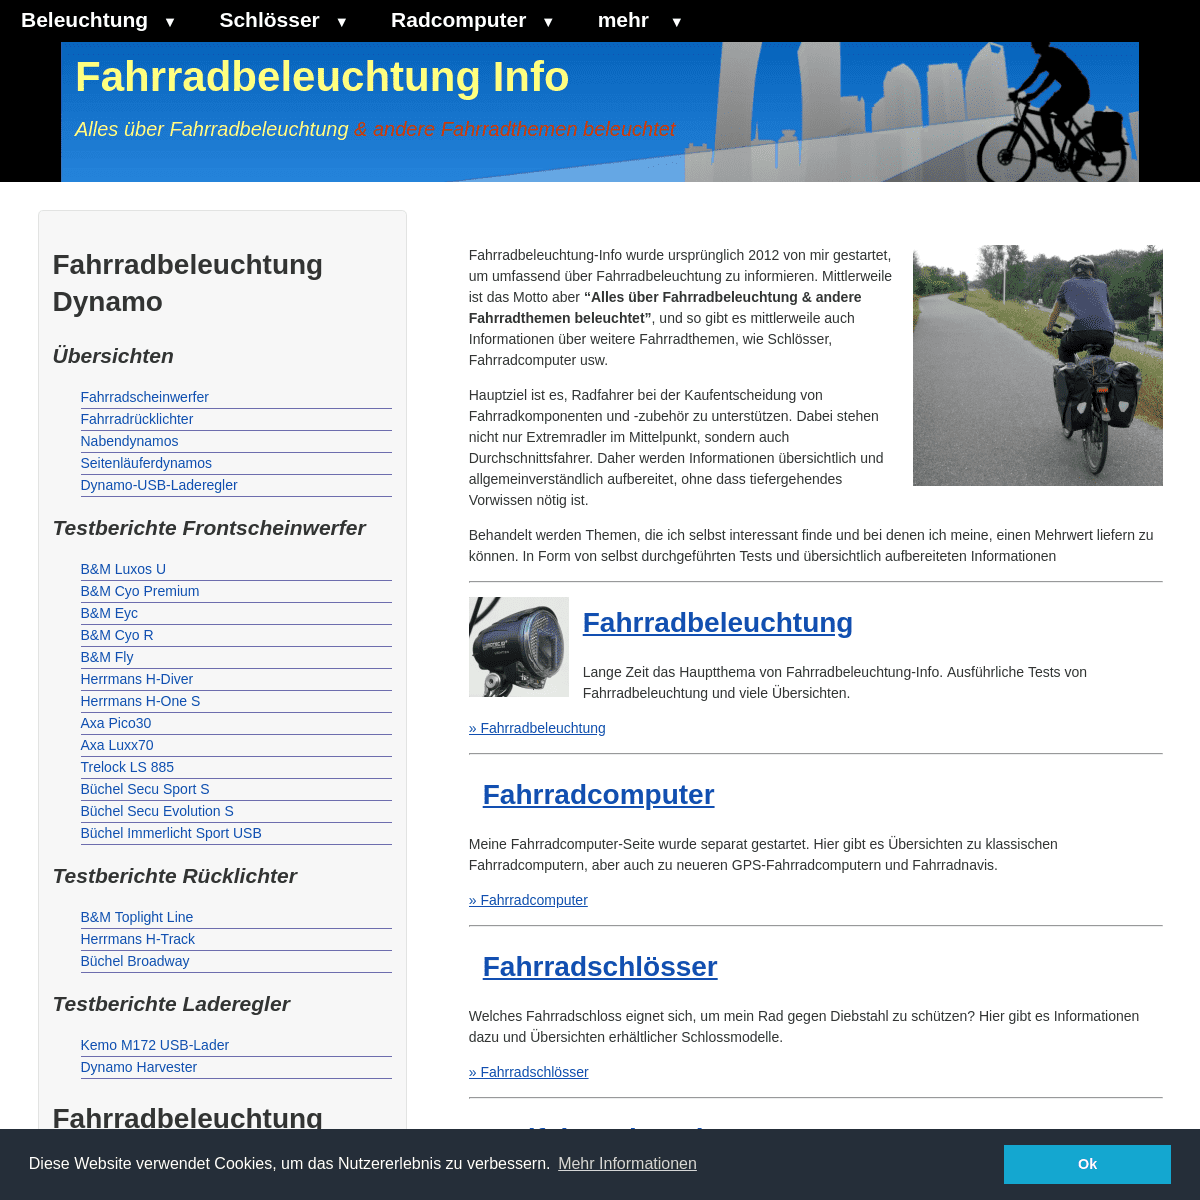 A complete backup of fahrradbeleuchtung-info.de